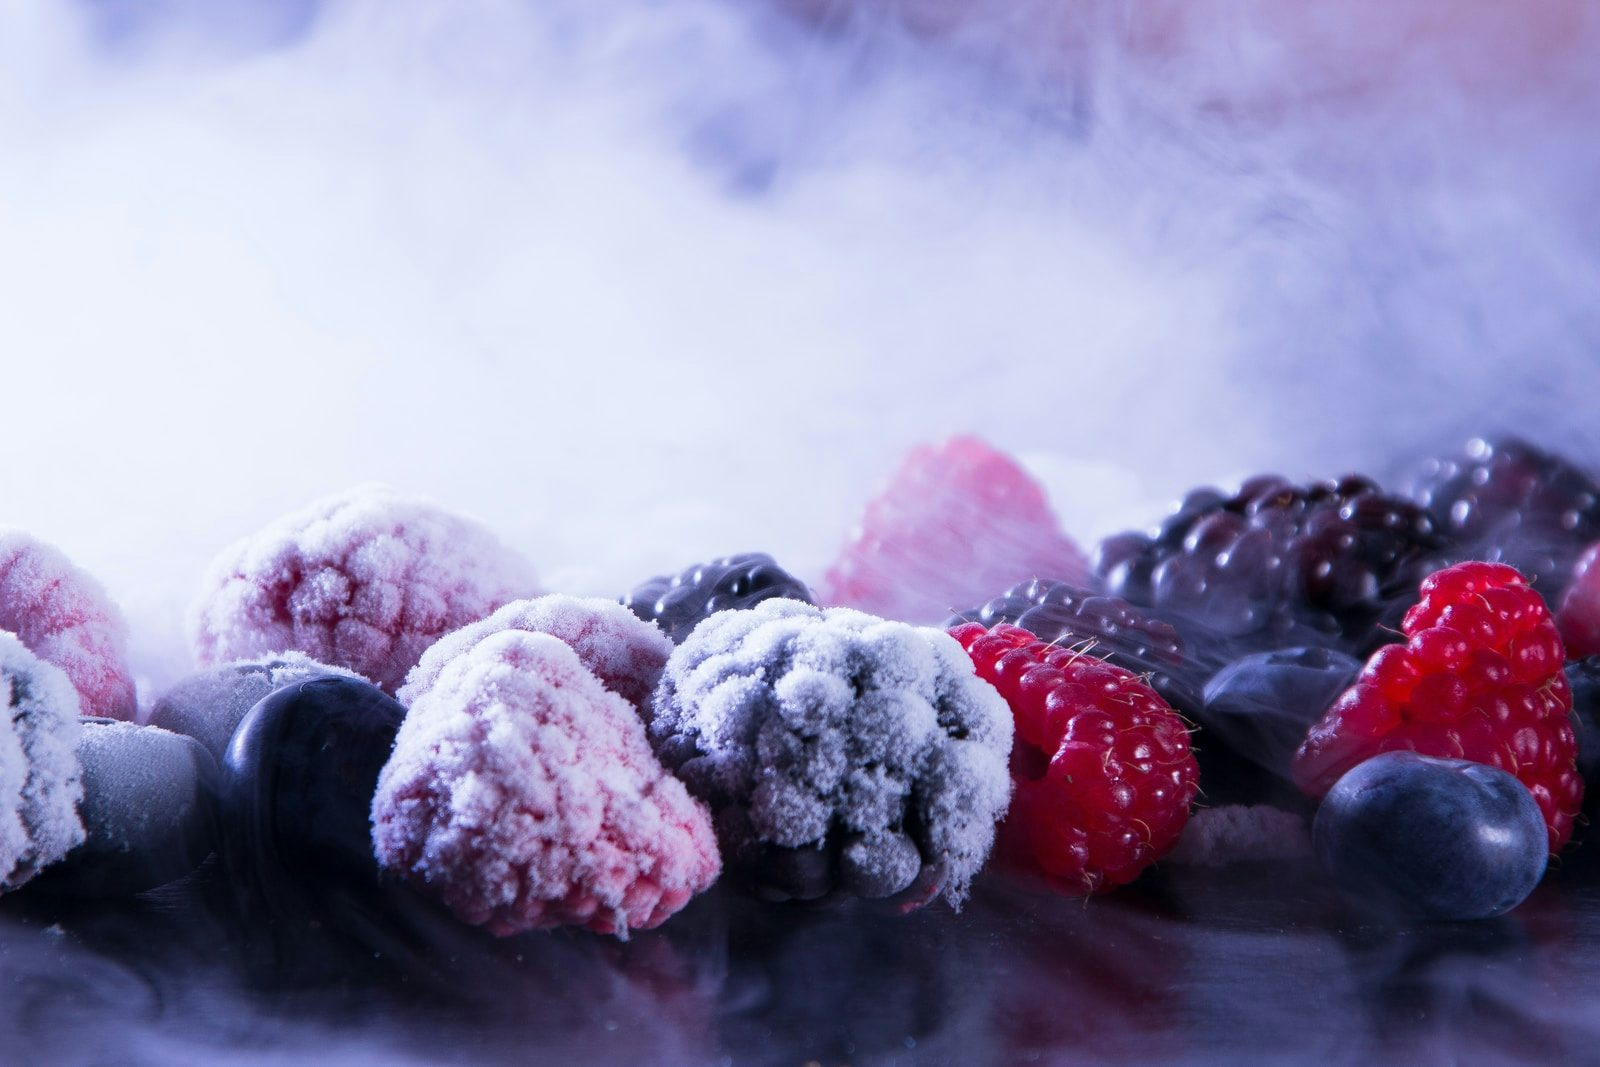 Frozen fruit cleaning